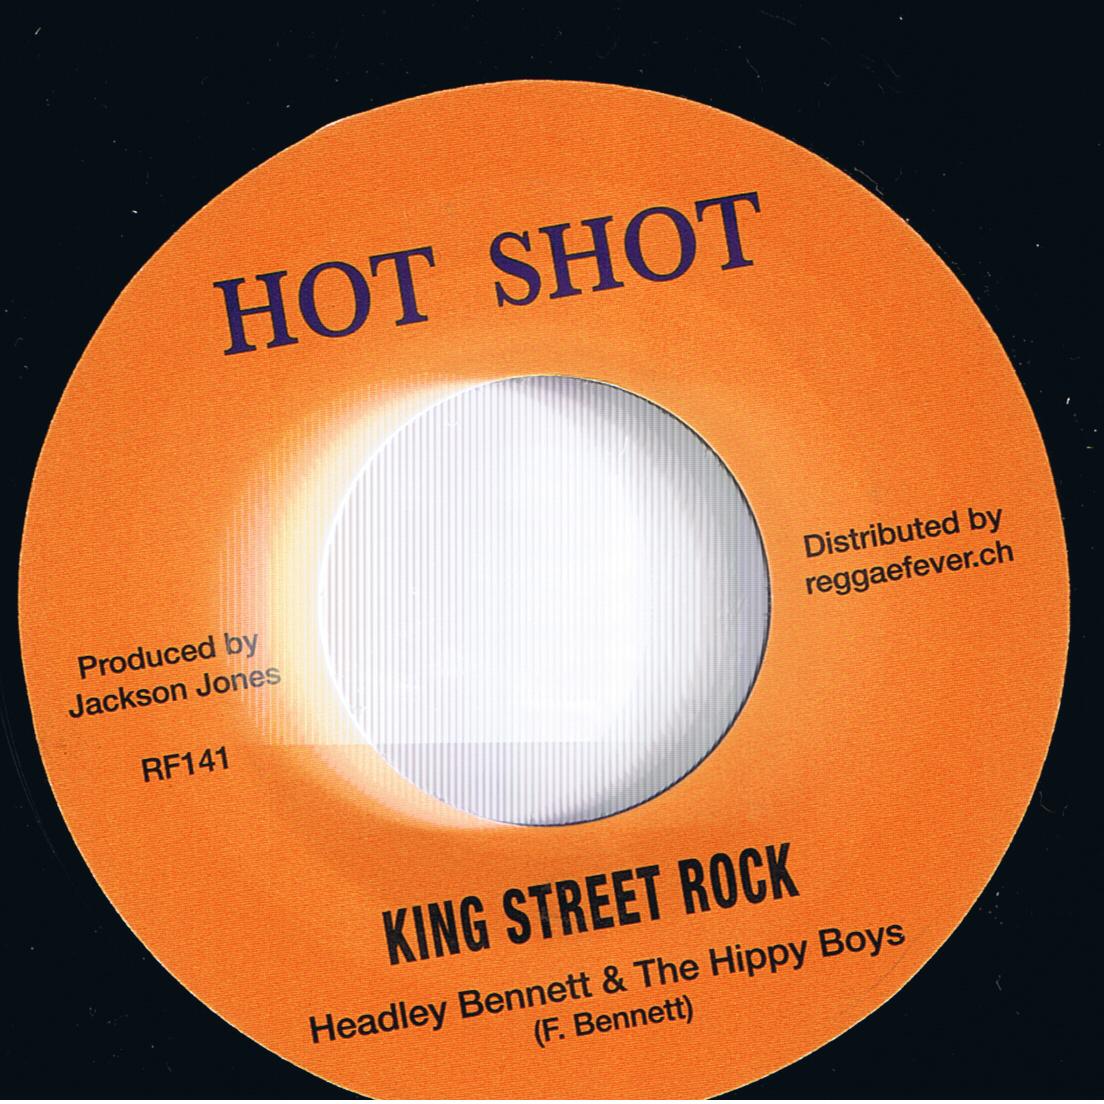 Headley Bennett & The Hippy Boys - King Street Rock / Leroy Bland & The Hippy Boys - Someone To Depend On (7")